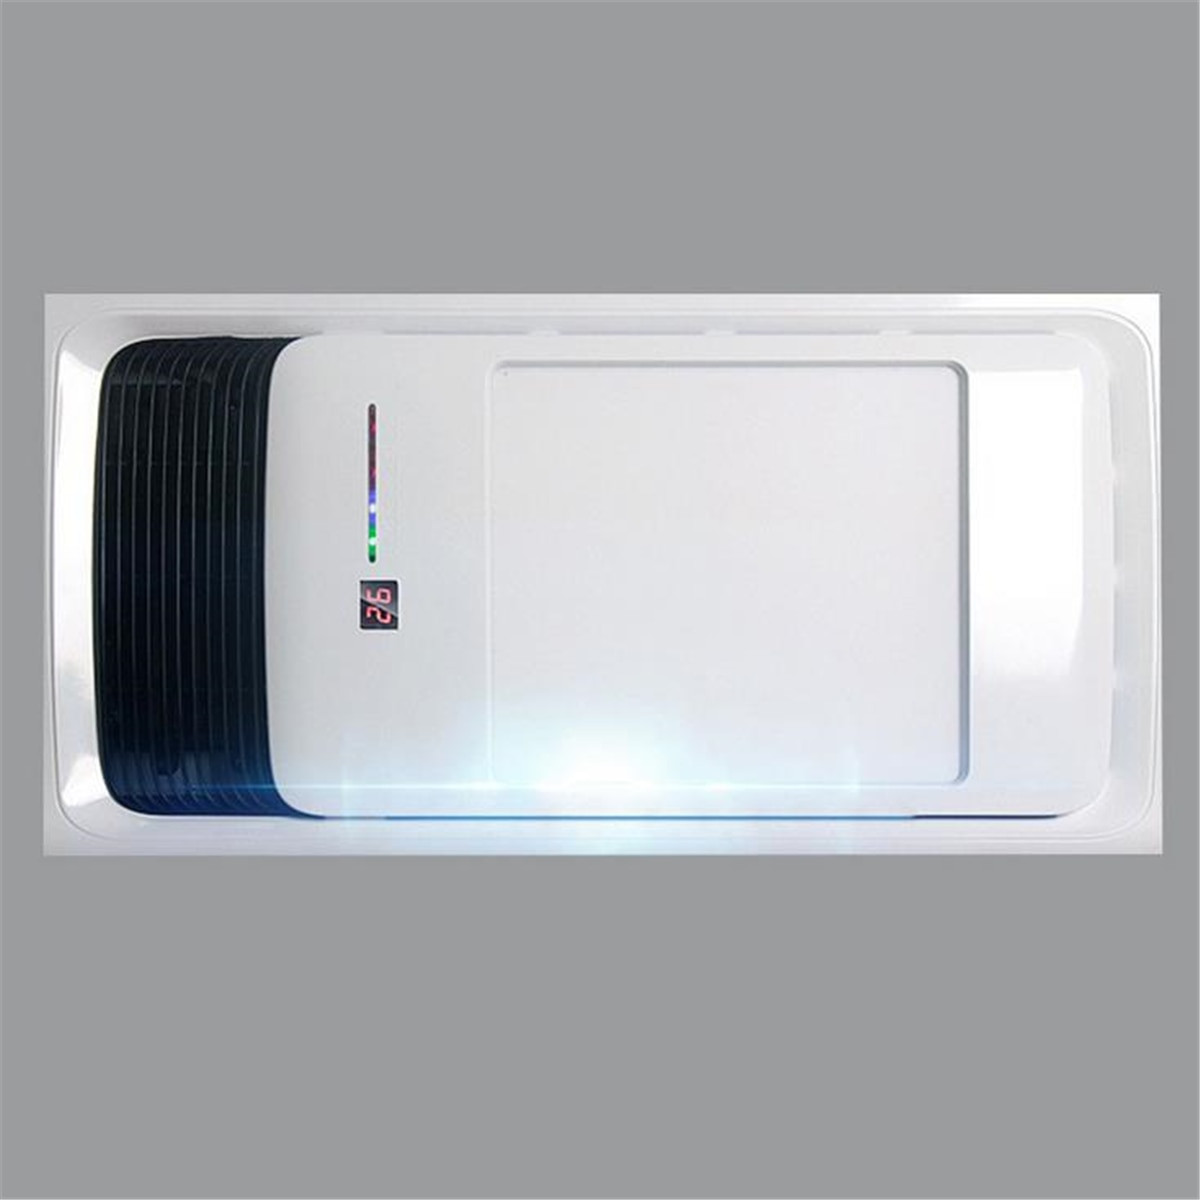 Bathroom Heaters Wall Mounted
 Wall Mounted Bathroom Electric Heater Exhaust Fan Warmer